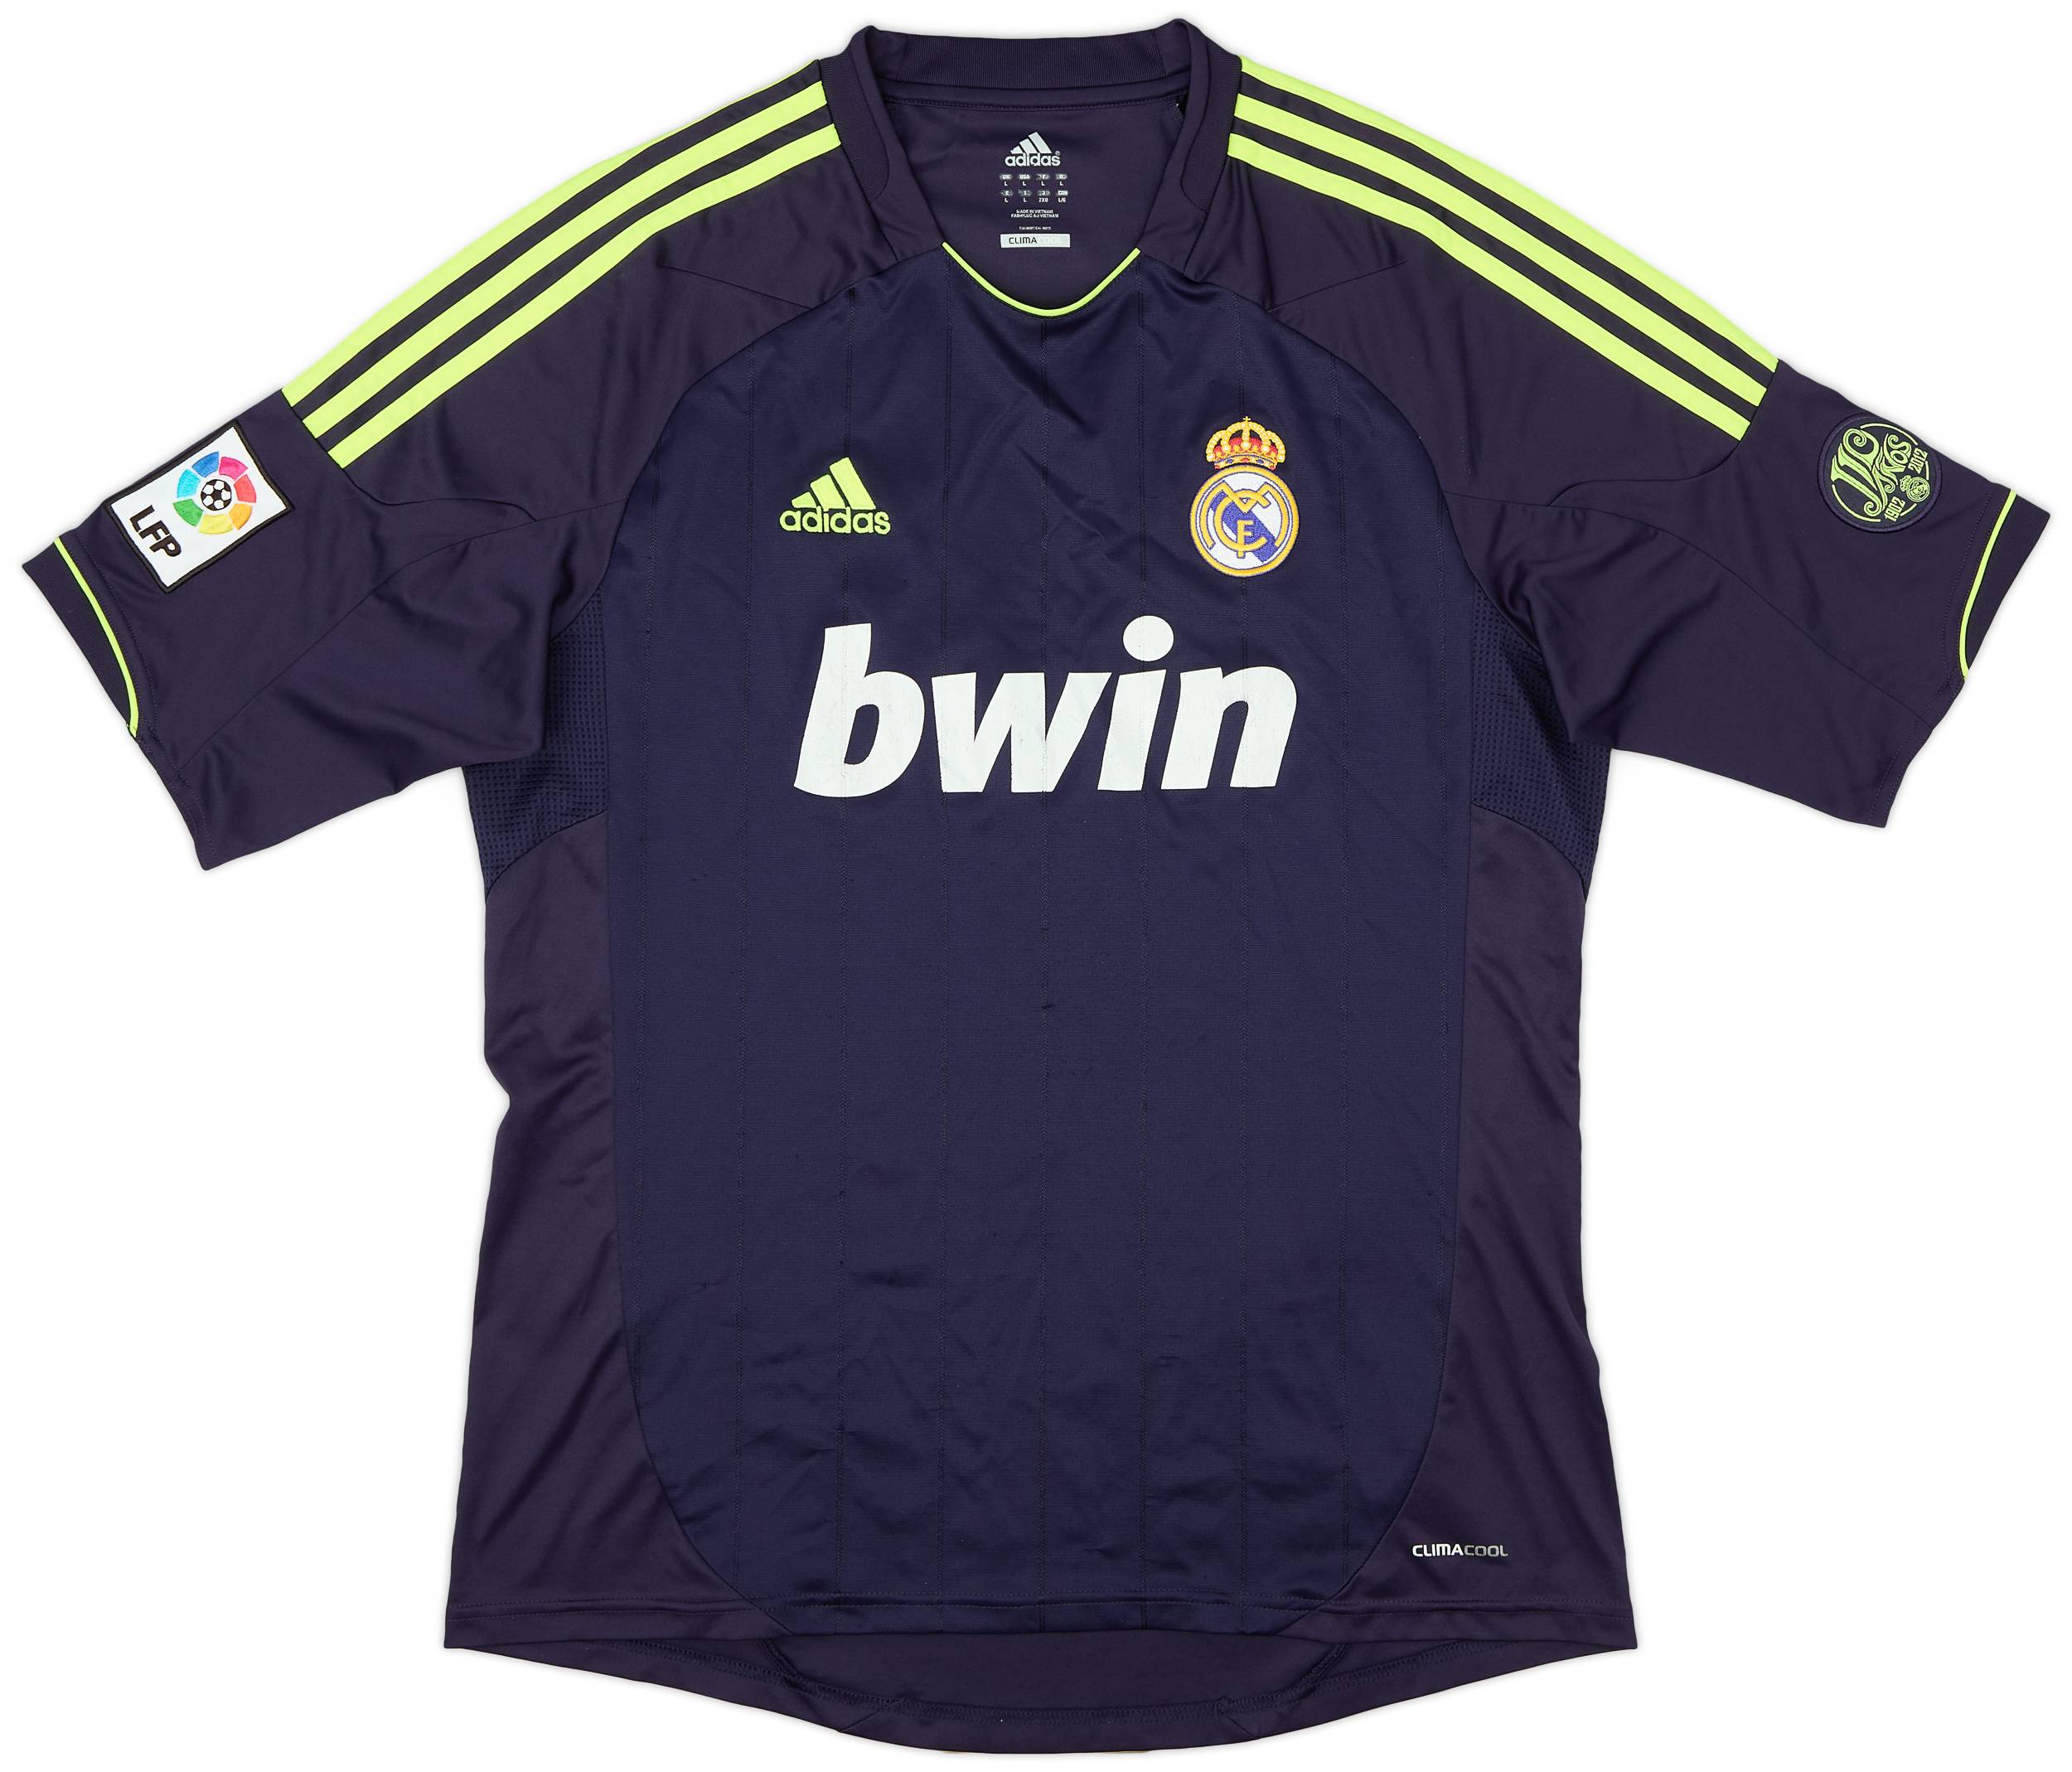 2012-13 Real Madrid Away Shirt - 6/10 - (L)